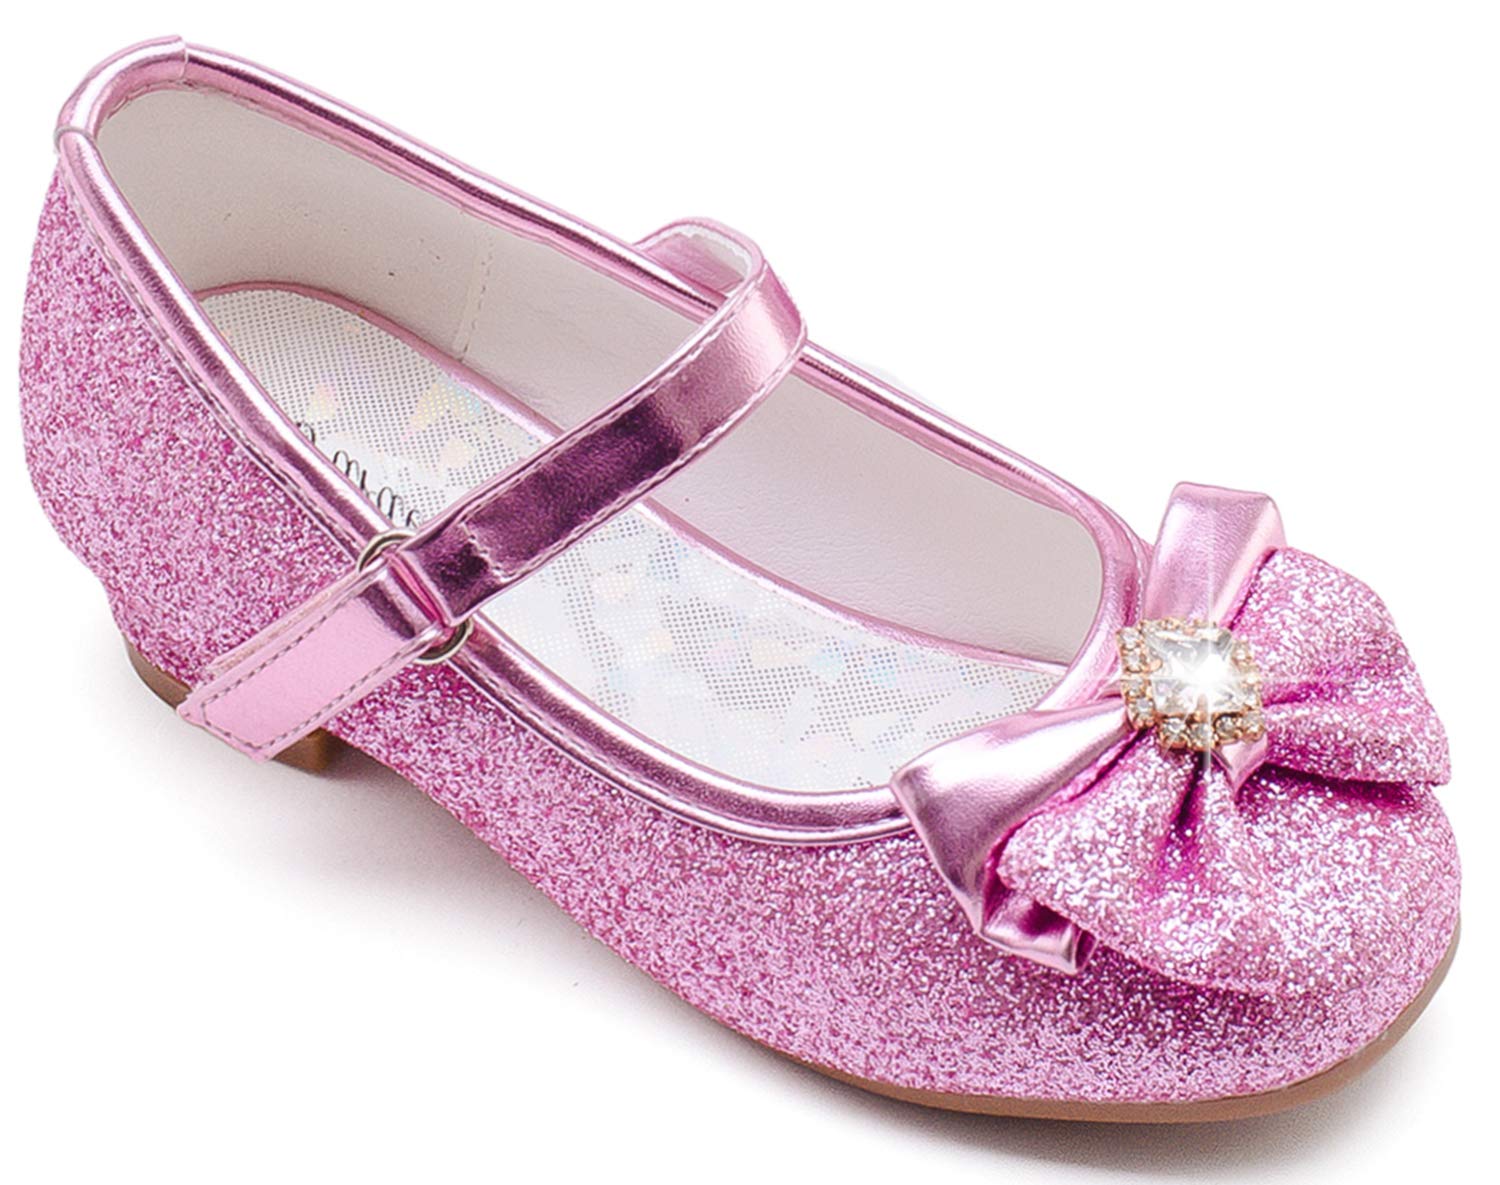 Furdeour Big girls Mary Jane glitter Shoes for Big girls Size 3 Pink Wedding High Heel Shoes girls Size 2 11 Yr Bridesmaid Flowe